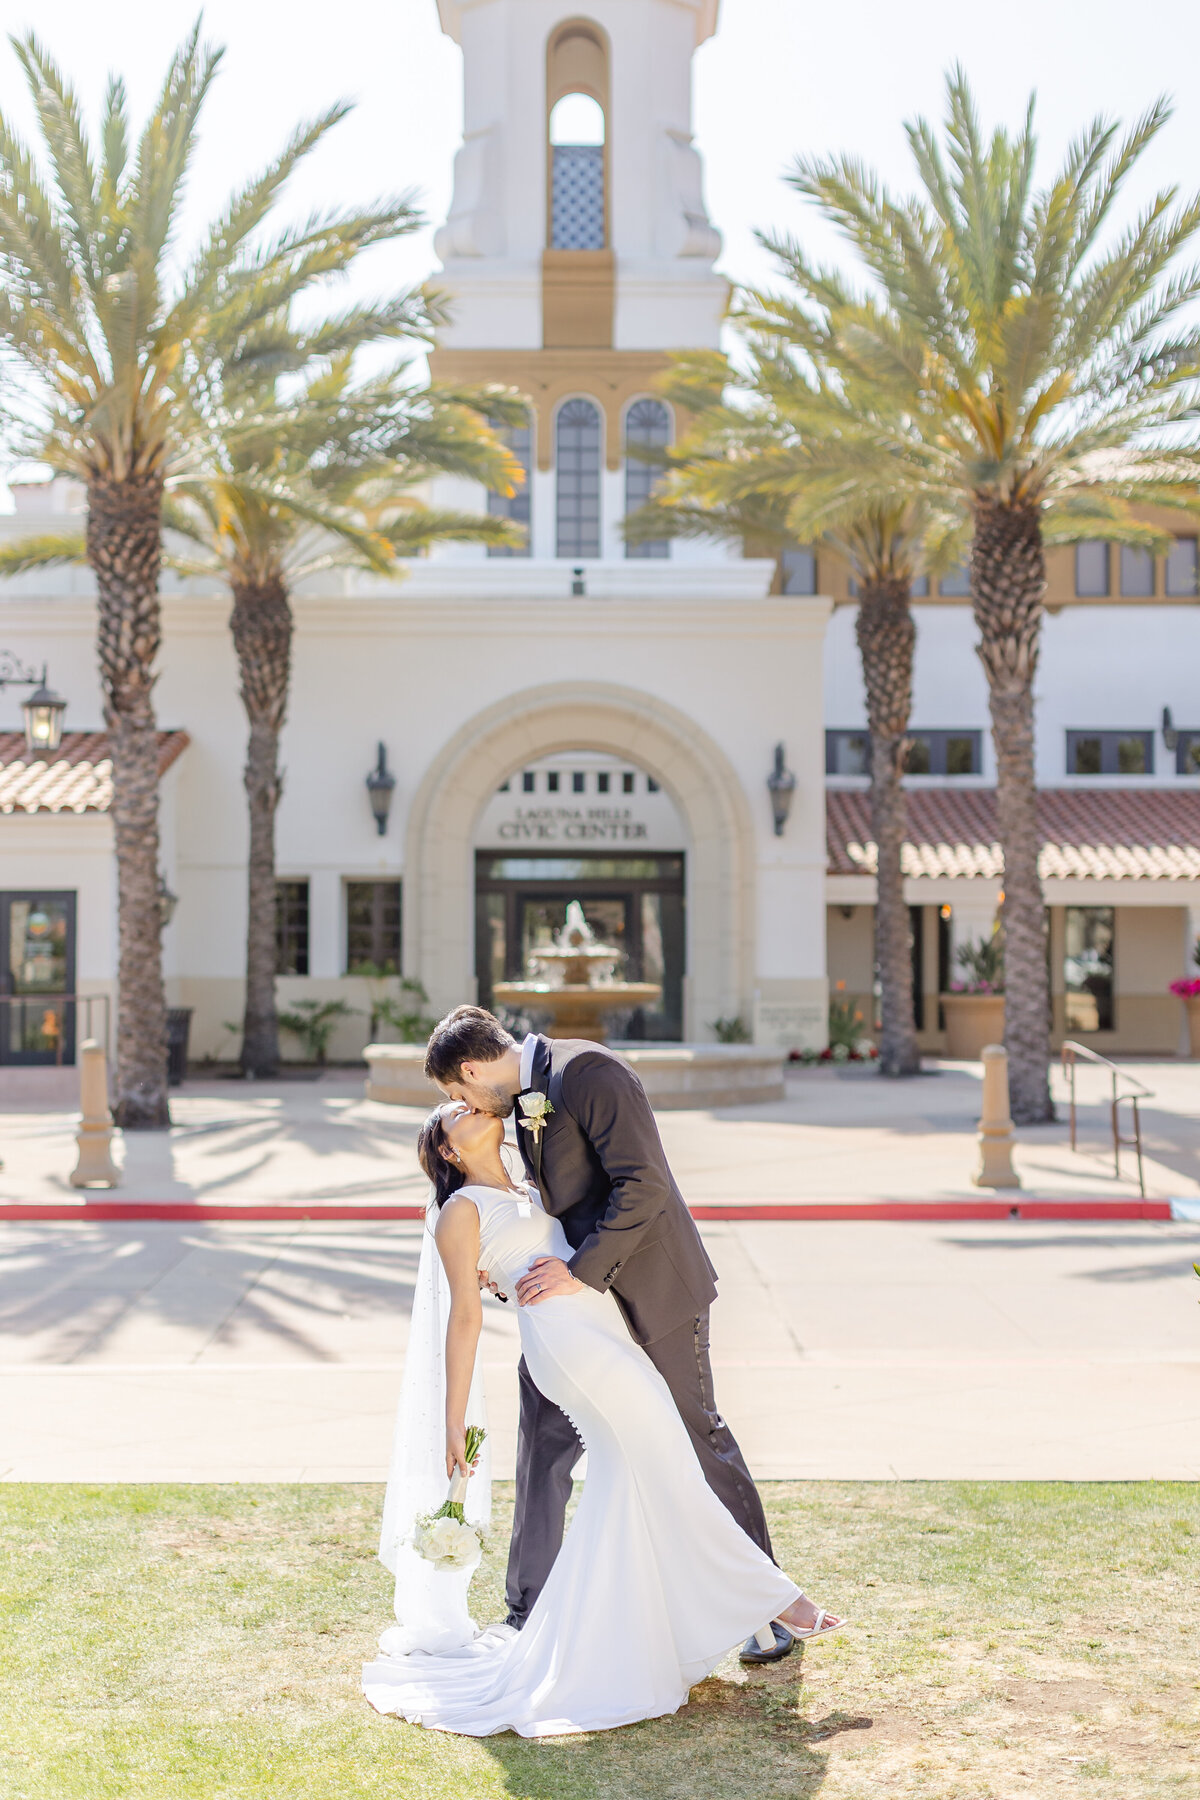 Professional Wedding photographer in Orange County, CA